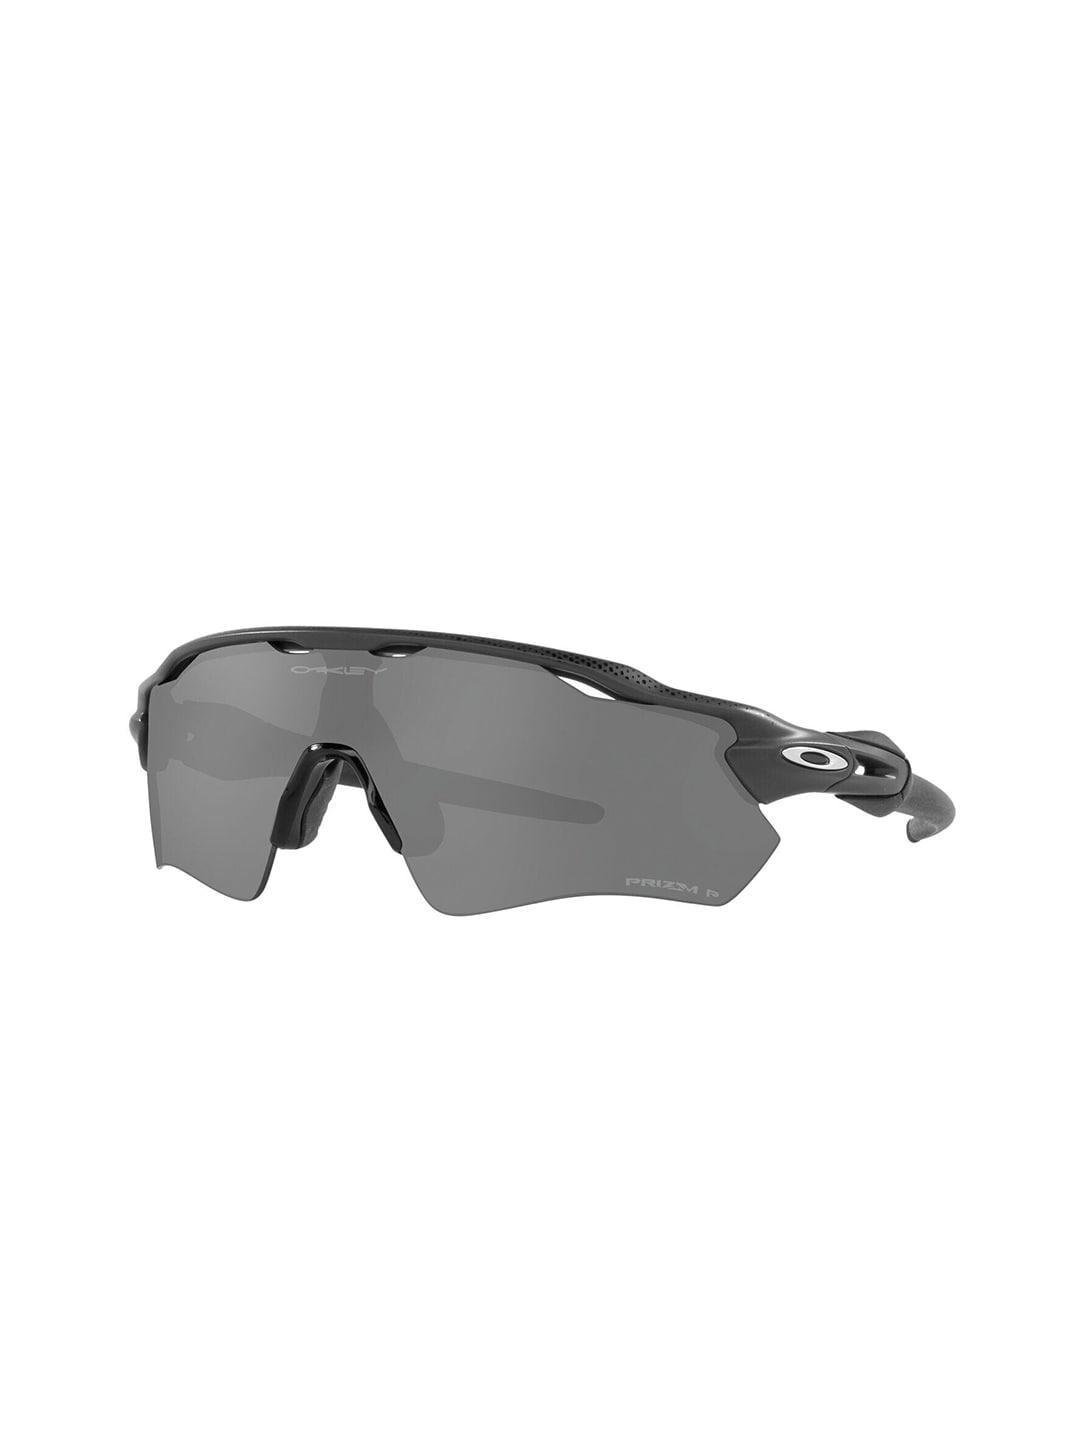 oakley-men-shield-sunglasses-with-polarised-lens-888392577184